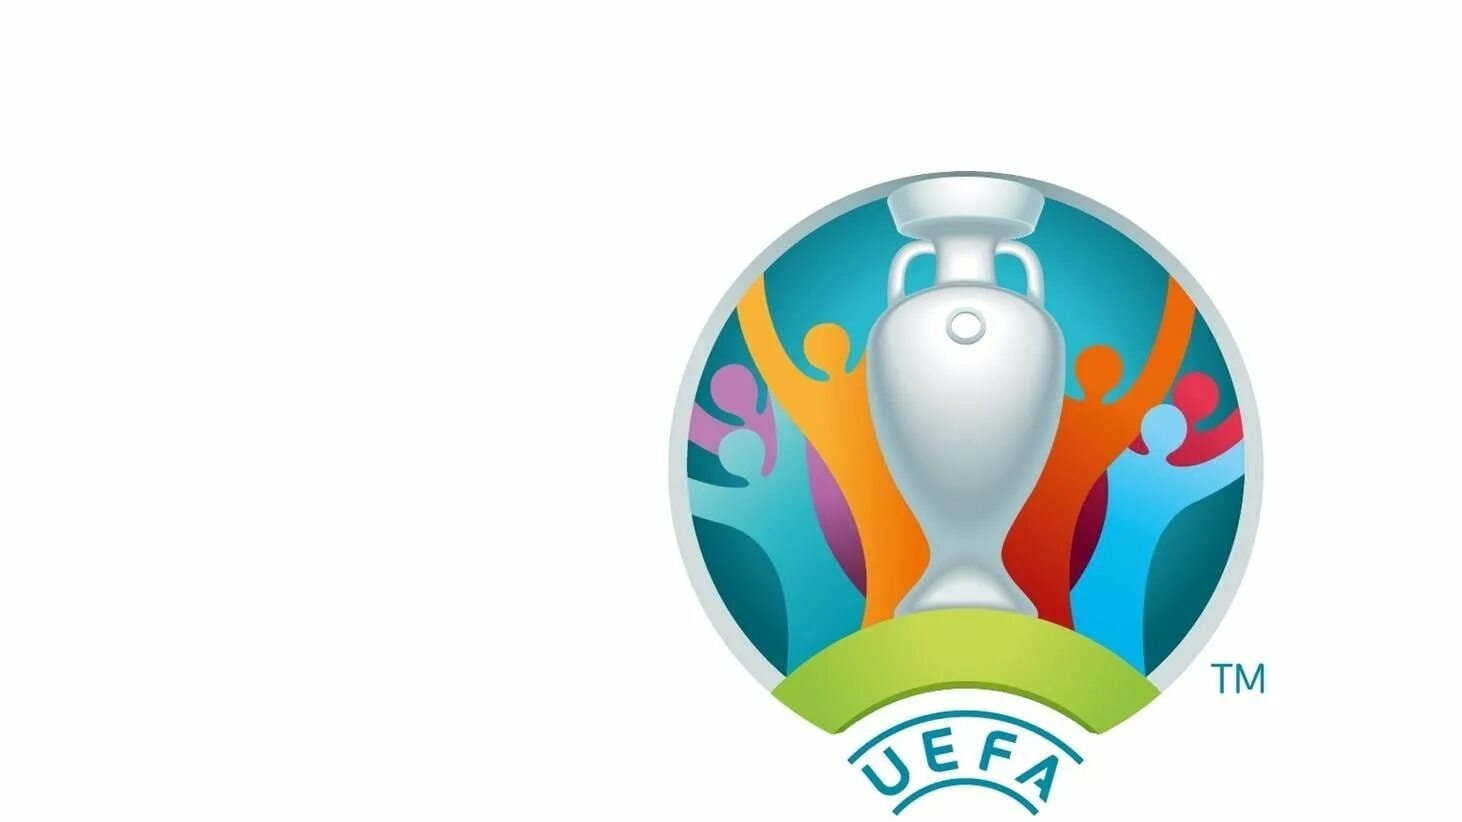 UEFA Euro 2020 логотип. УЕФА евро 2020 лого. Чемпионат Европы по футболу 2020 эмблема. Чемпионат Европы УЕФА 2020.